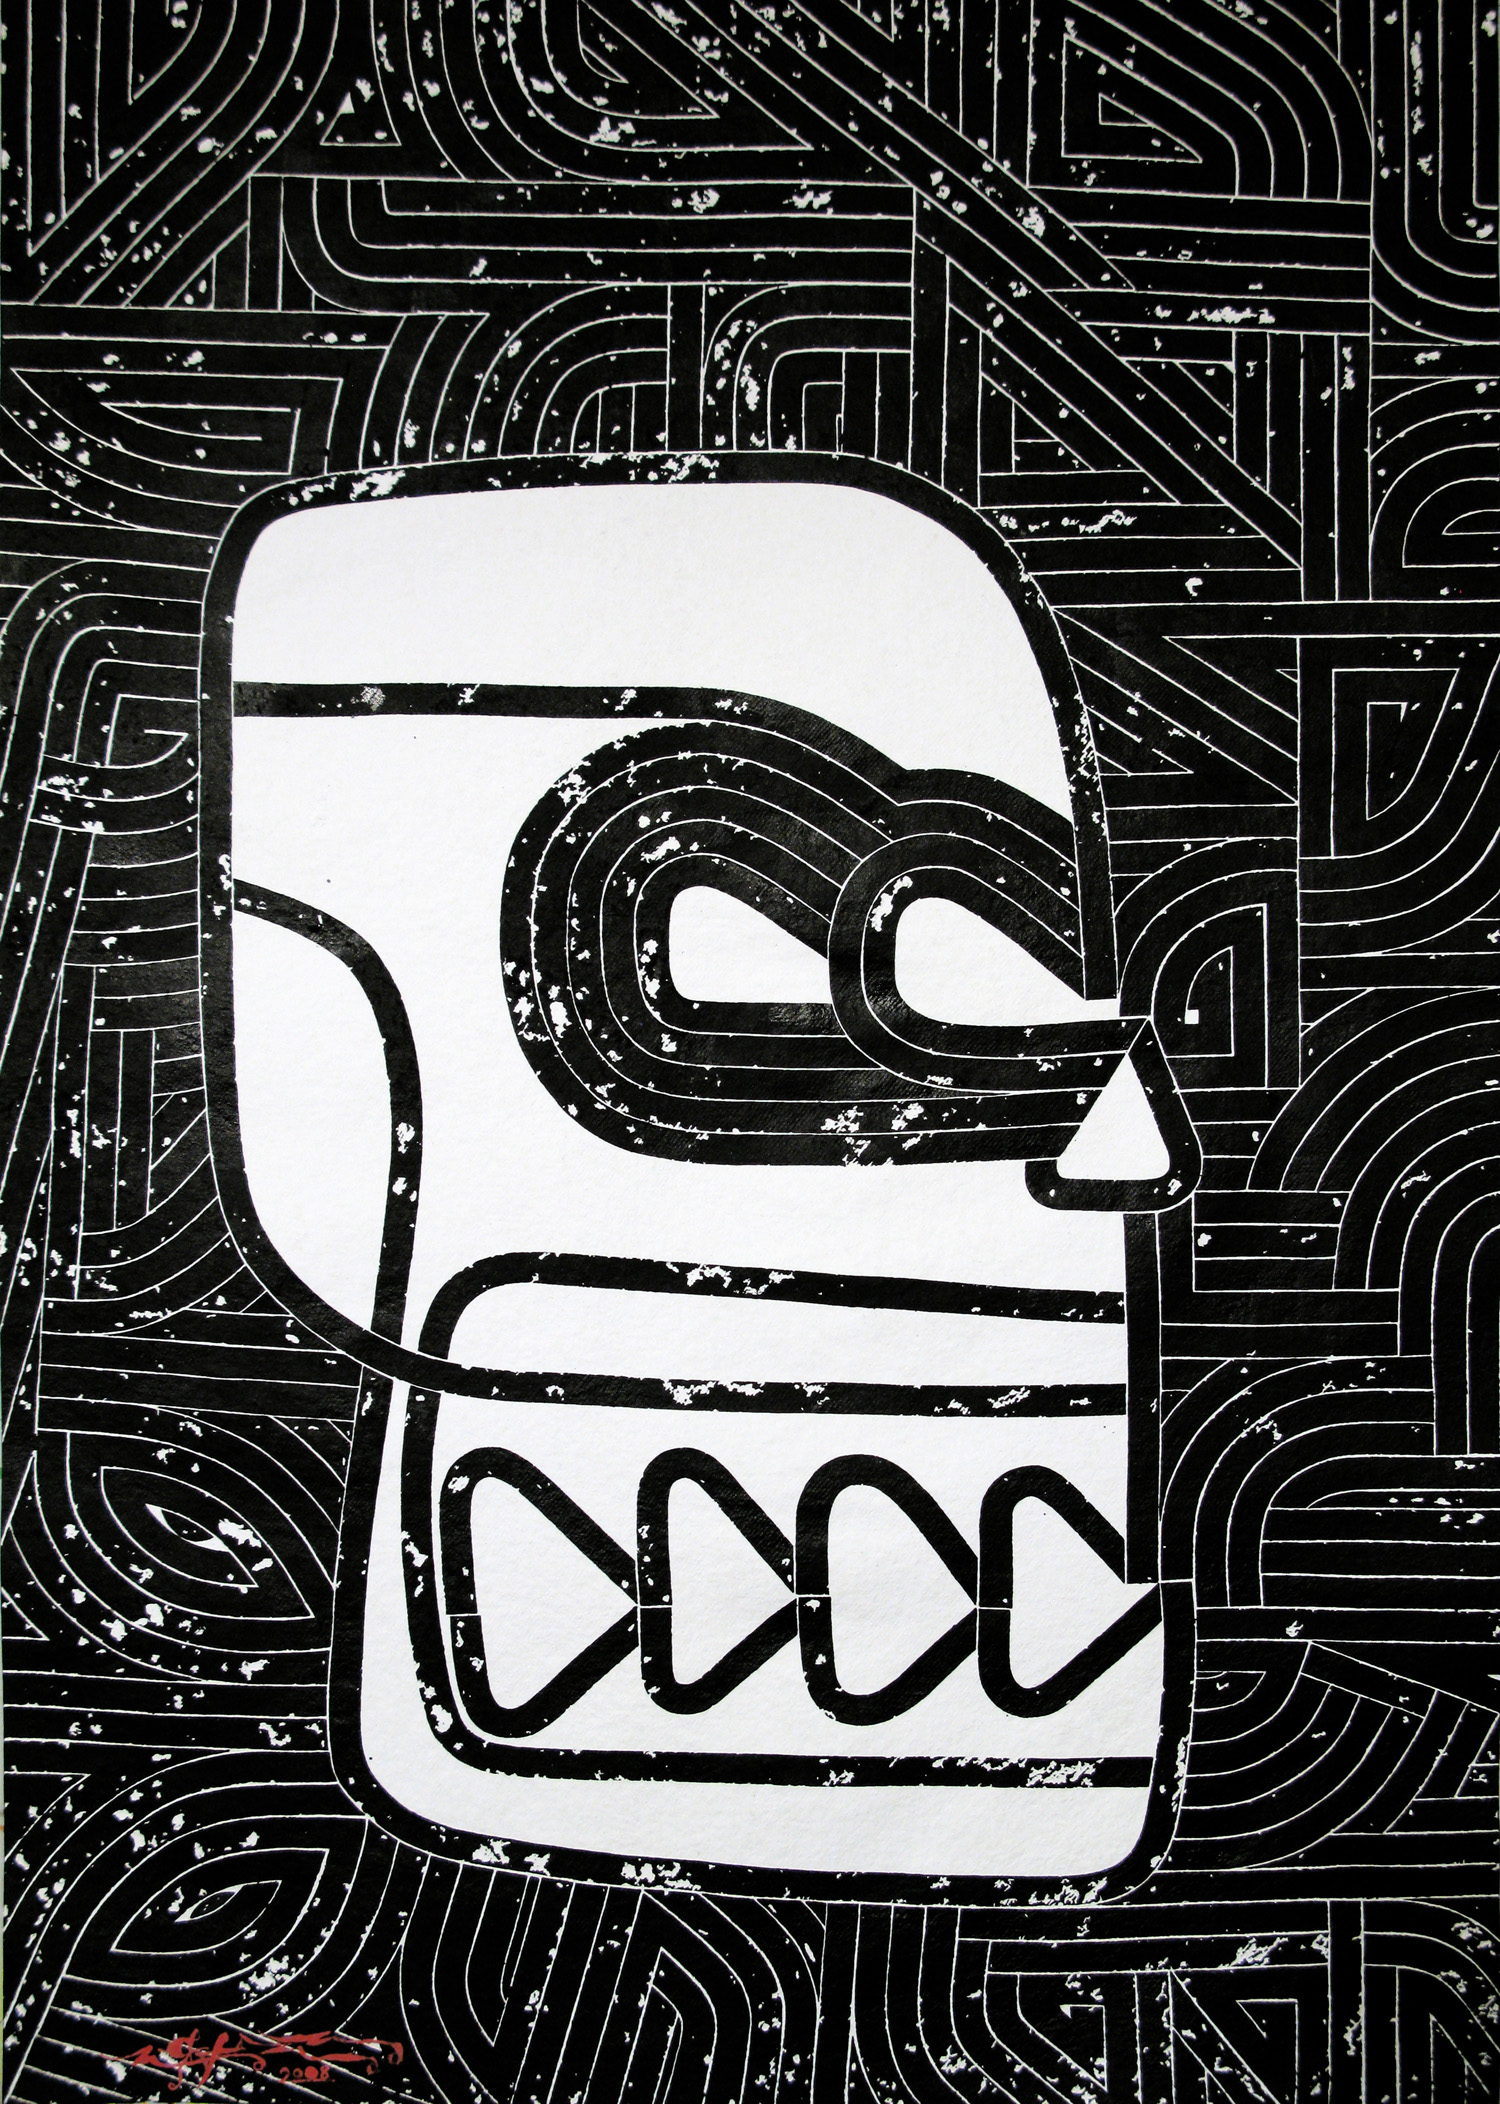  Phrenology Maximus, 2008 sumi ink on handmade paper 52 x 36 inch 